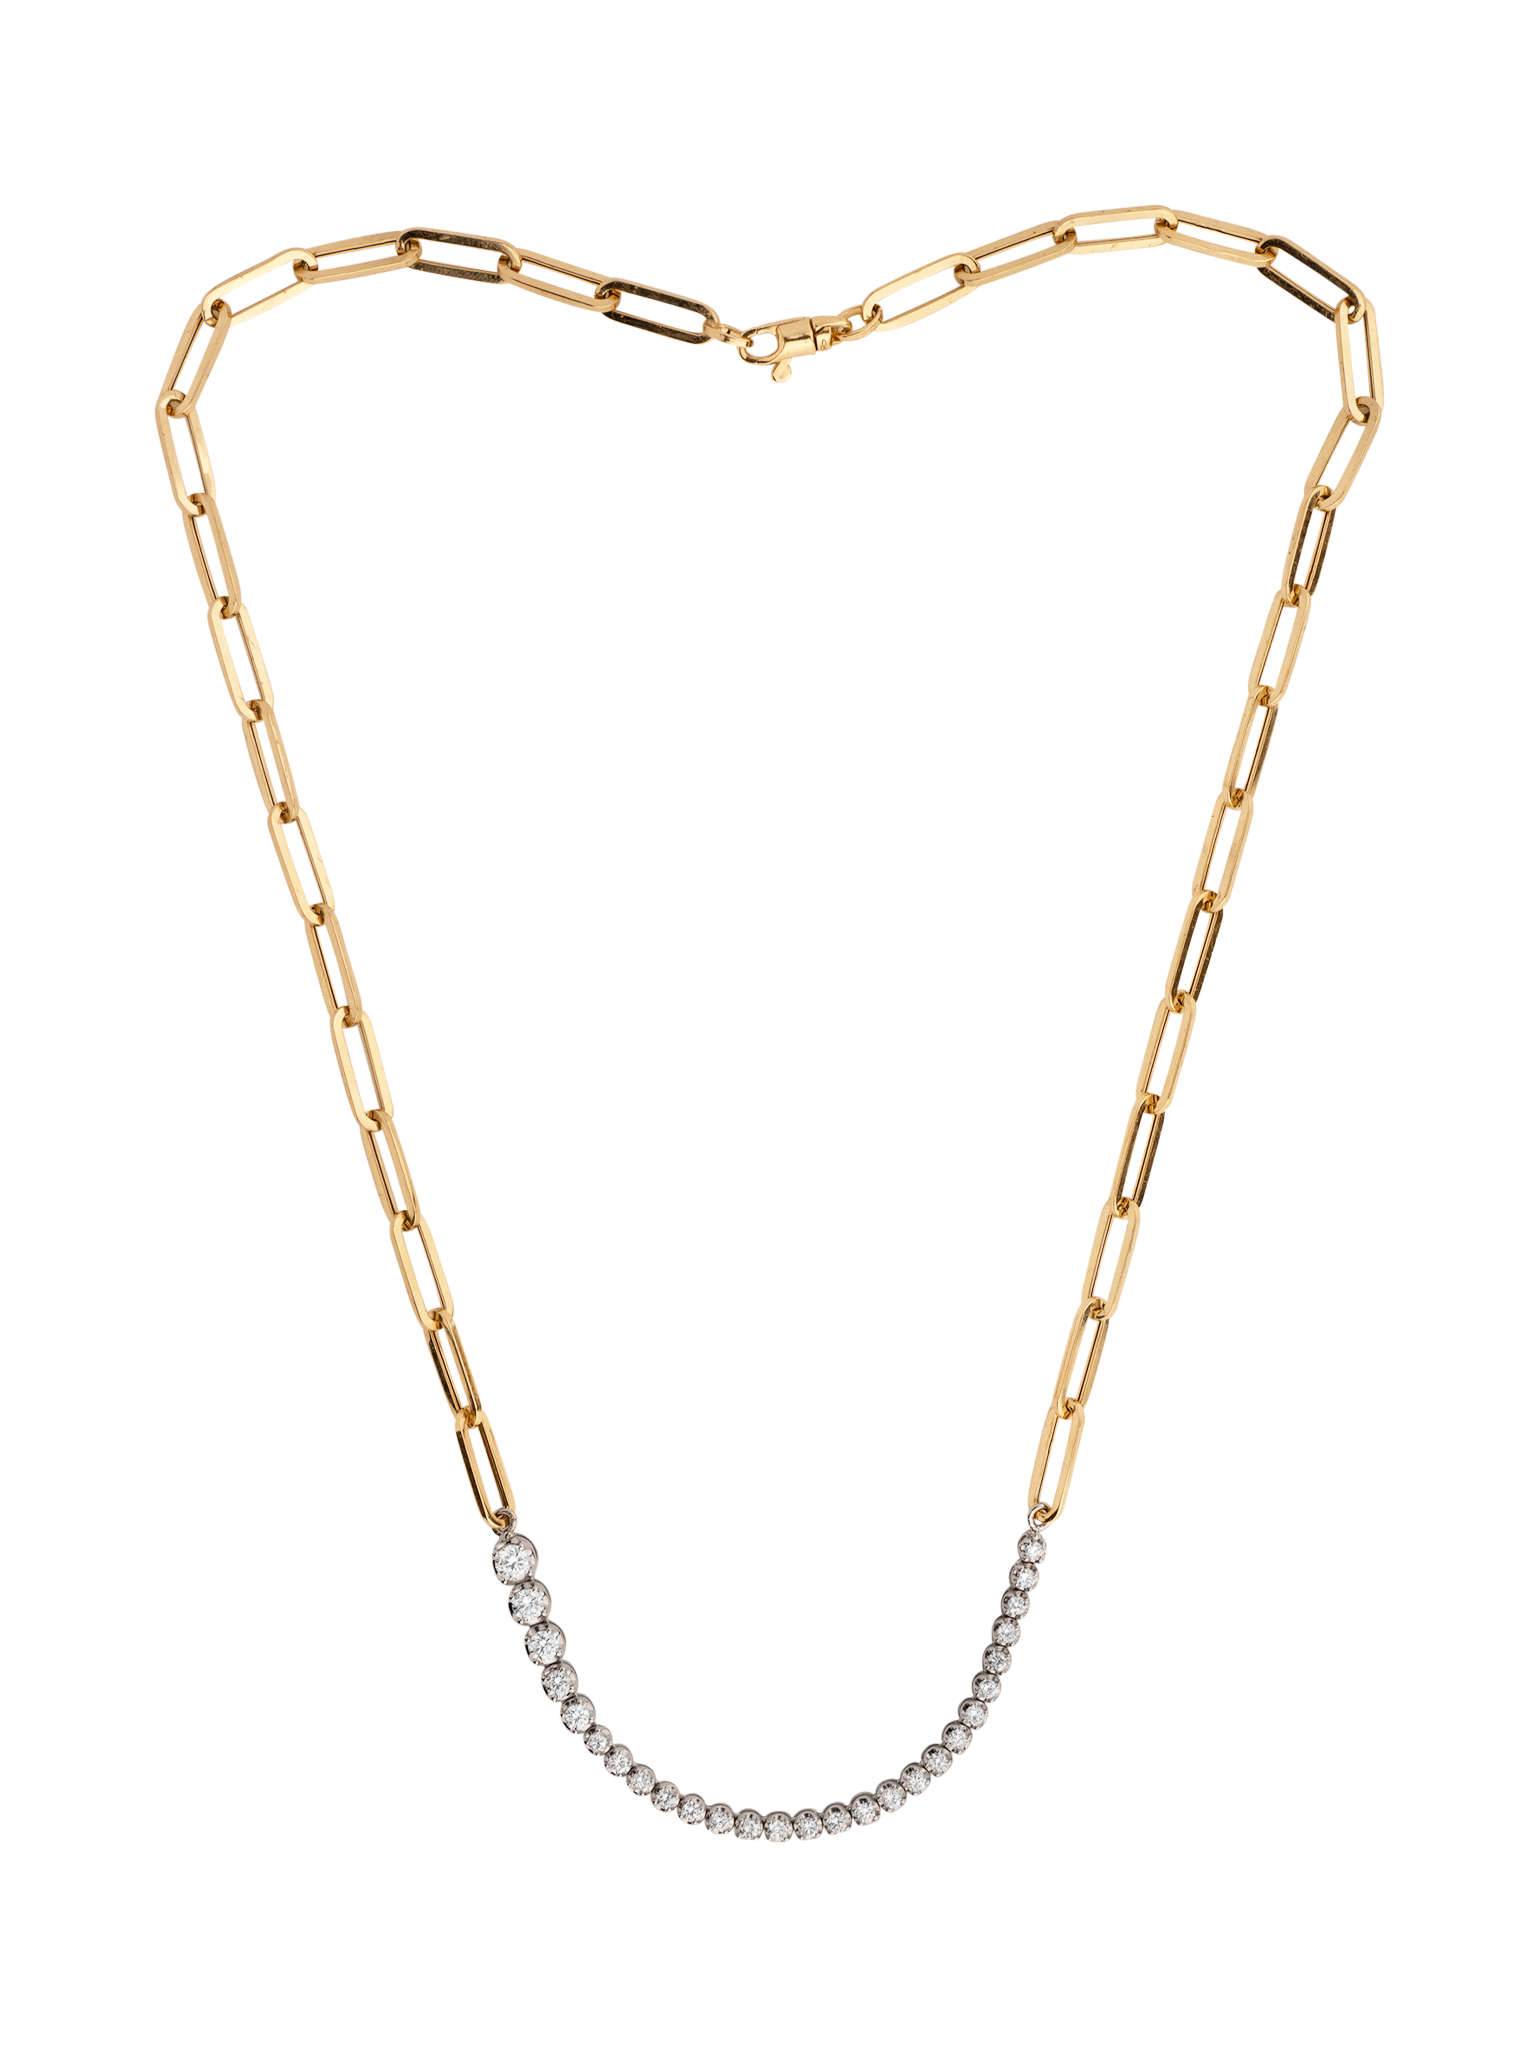 Ascending diamonds tennis necklace on rectangular chain